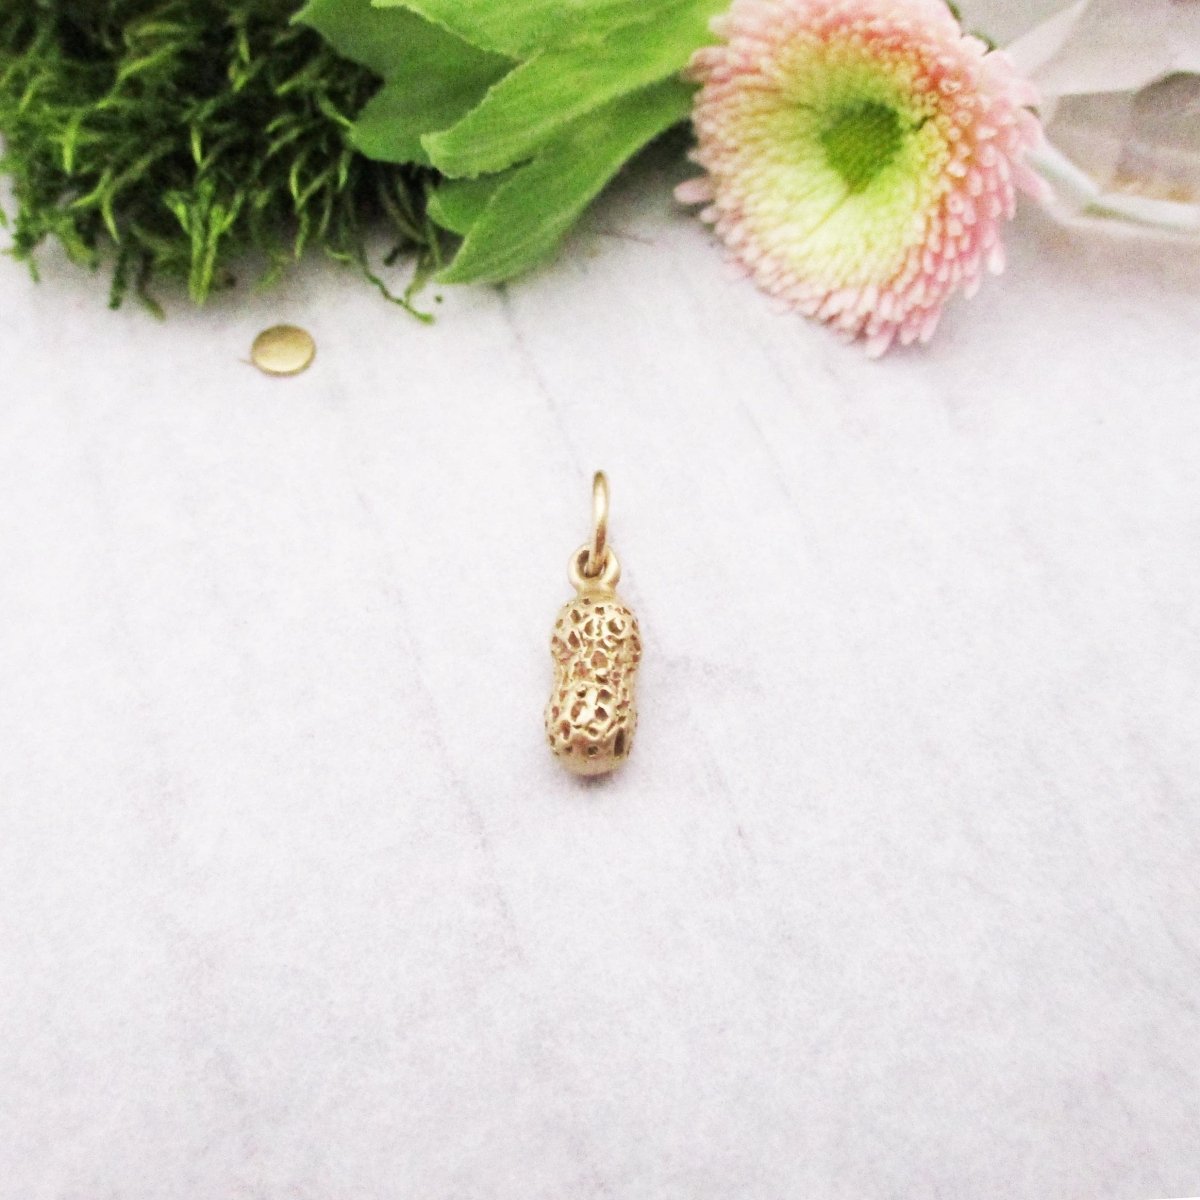 Tiny Little Peanut Charm in solid 14 Karat Gold - Luxe Design Jewellery